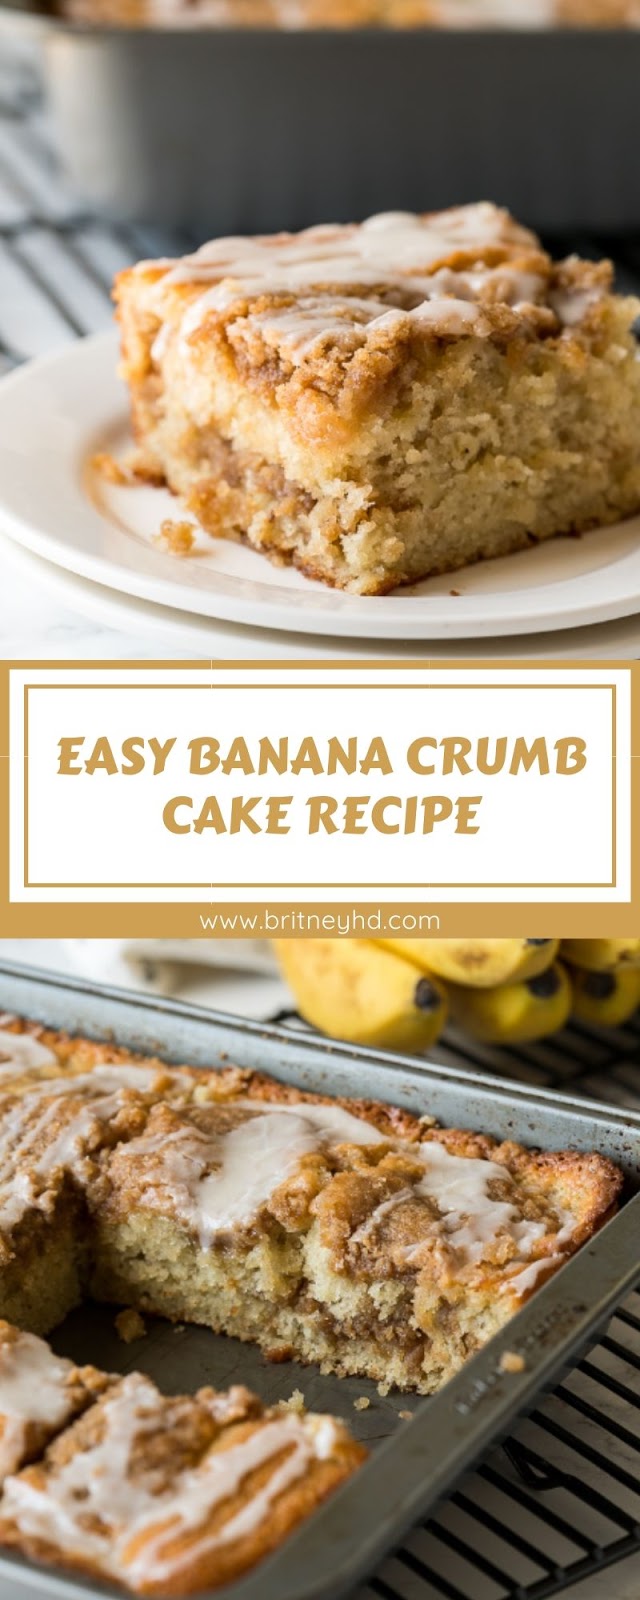 EASY BANANA CRUMB CAKE RECIPE